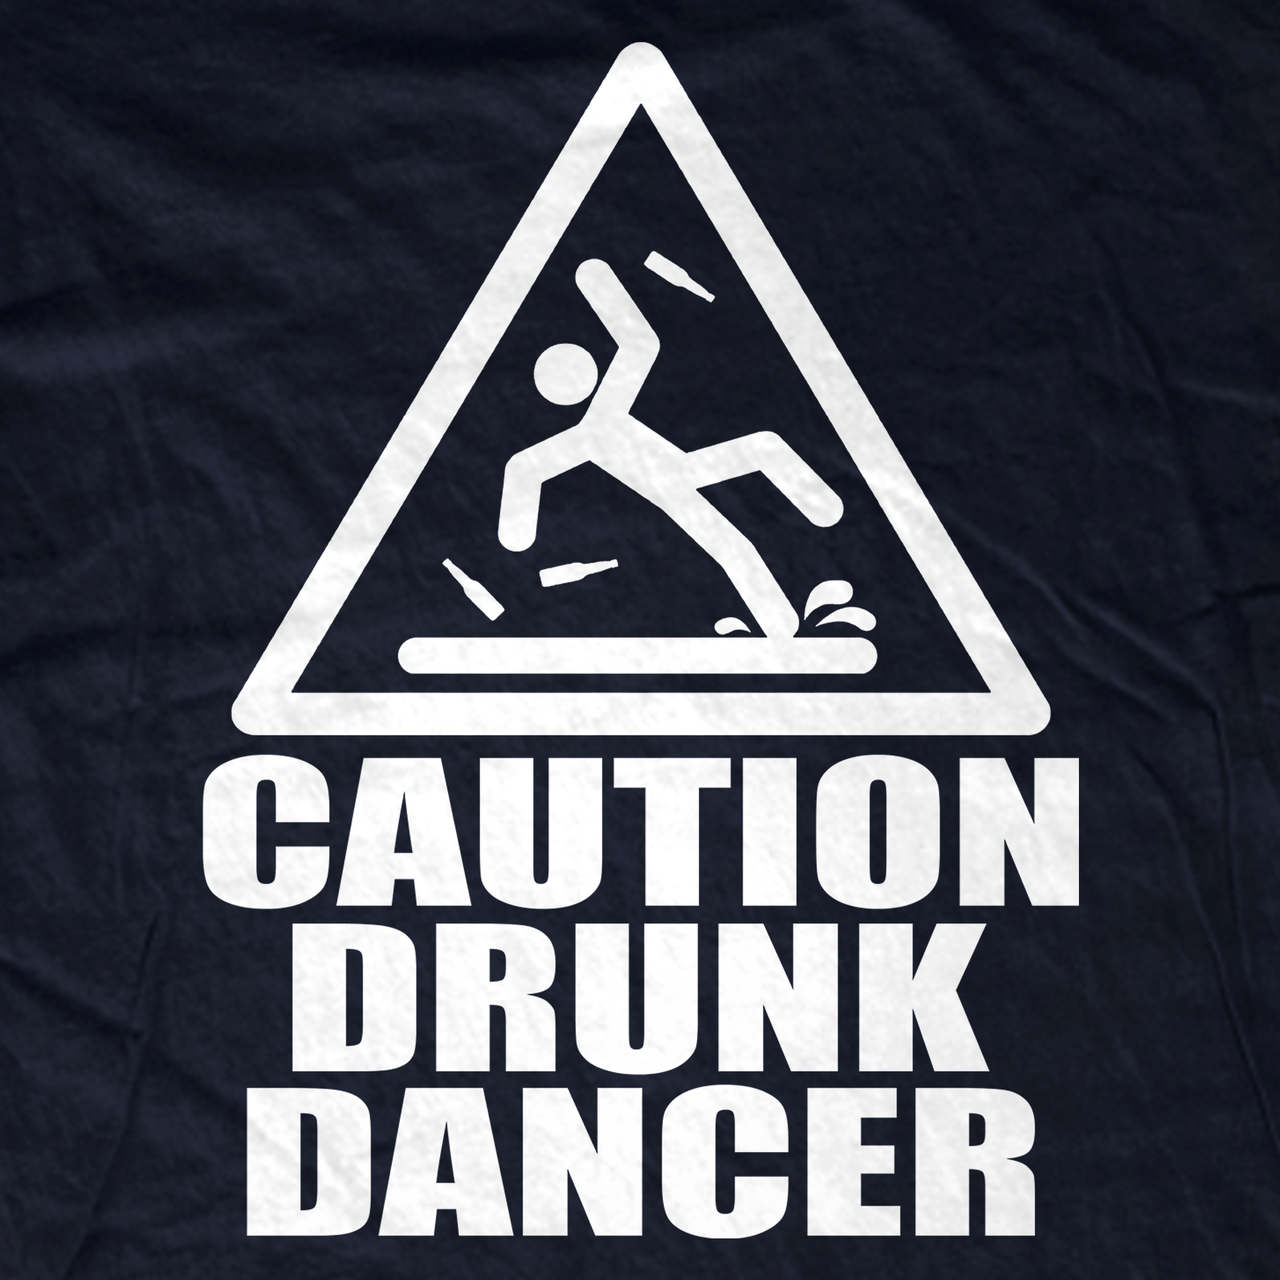 Caution Drunk Dancer T-Shirt - First Amendment Tees Co. Inc.